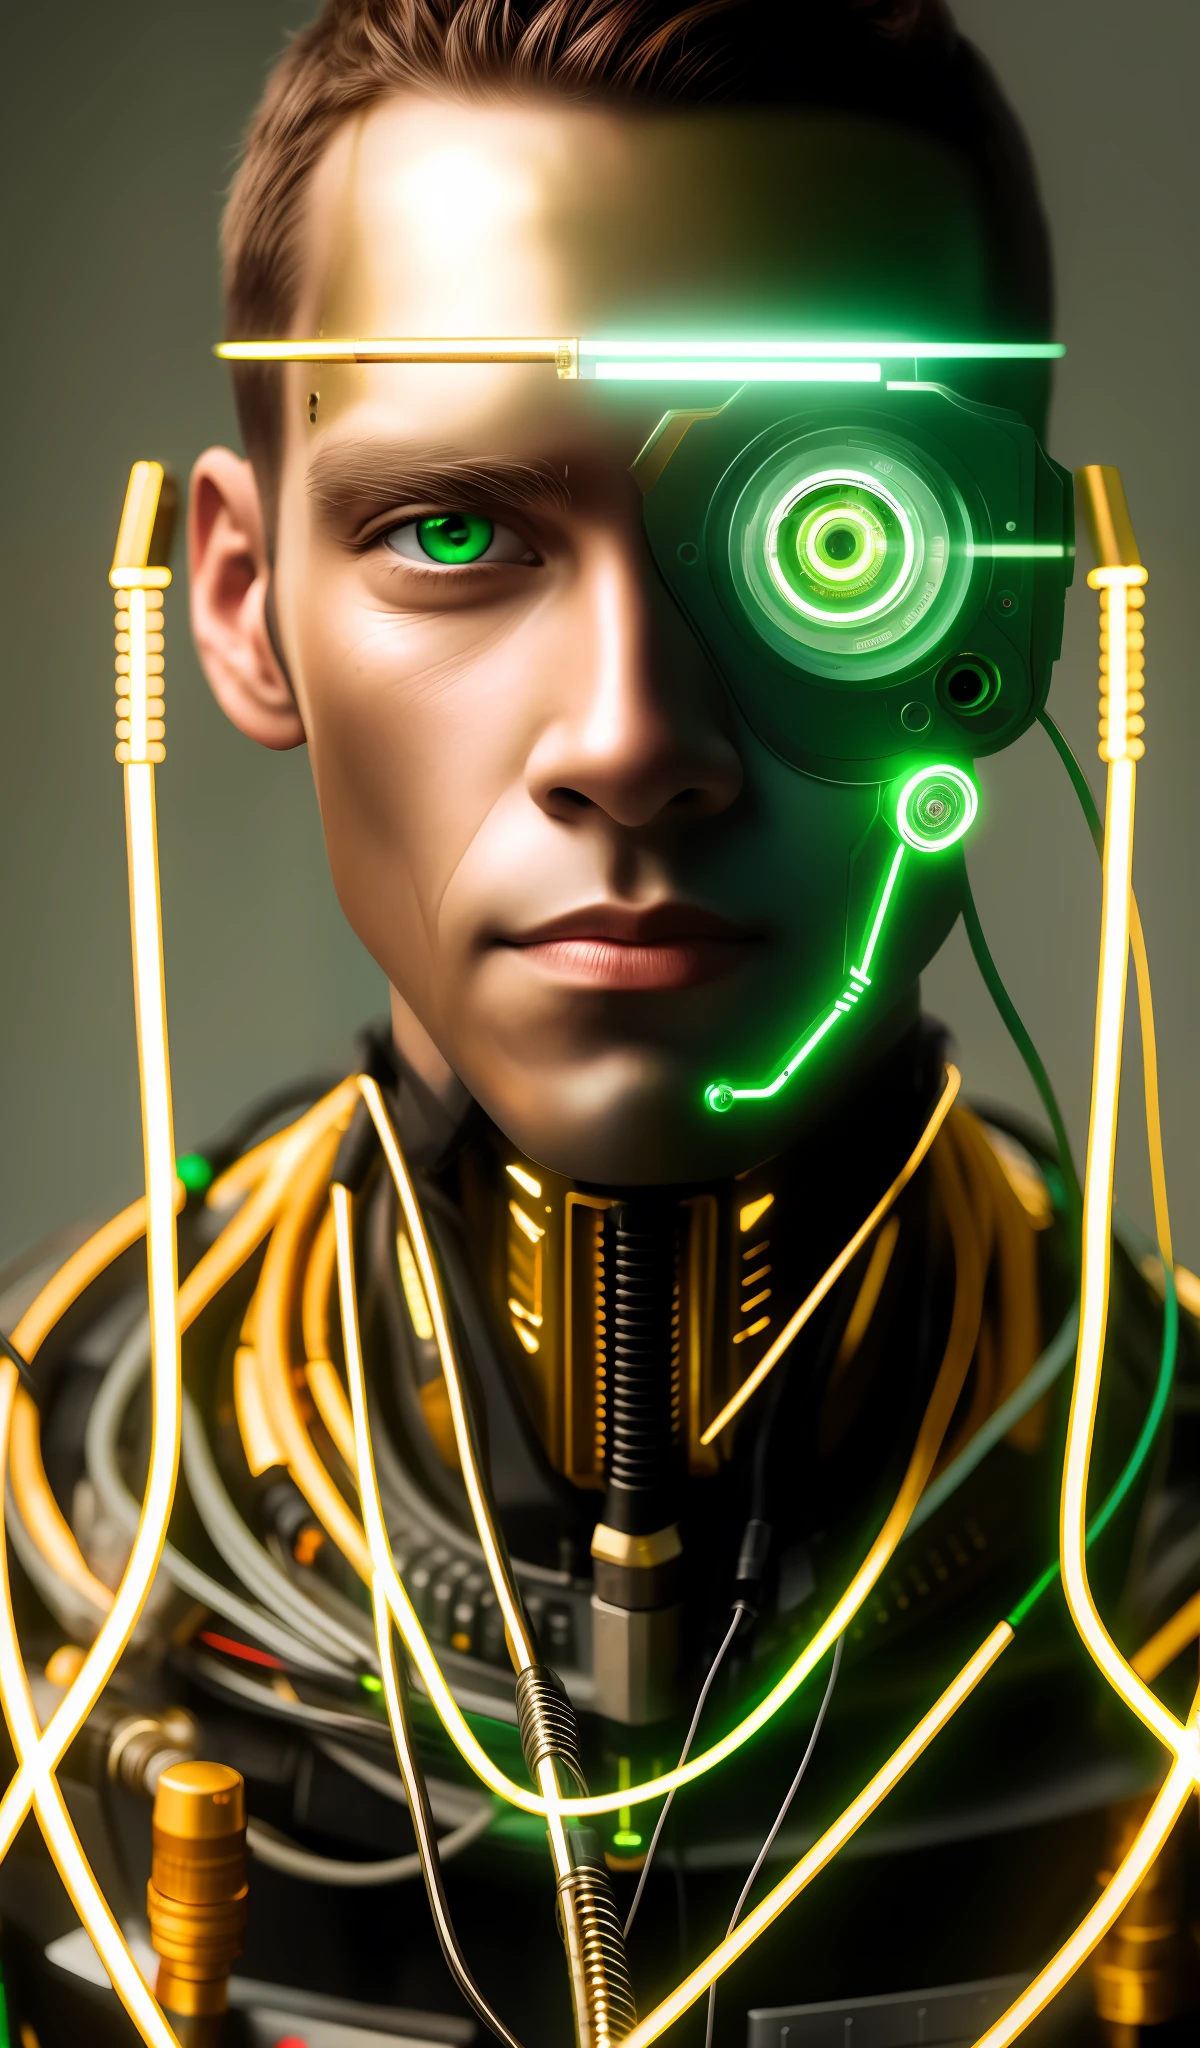 Cyborg Man Medium Shot, grüne Augen, Overall, Modell Gesicht, Freiliegende Drähte, Goldöl tritt aus rostigen Drähten aus